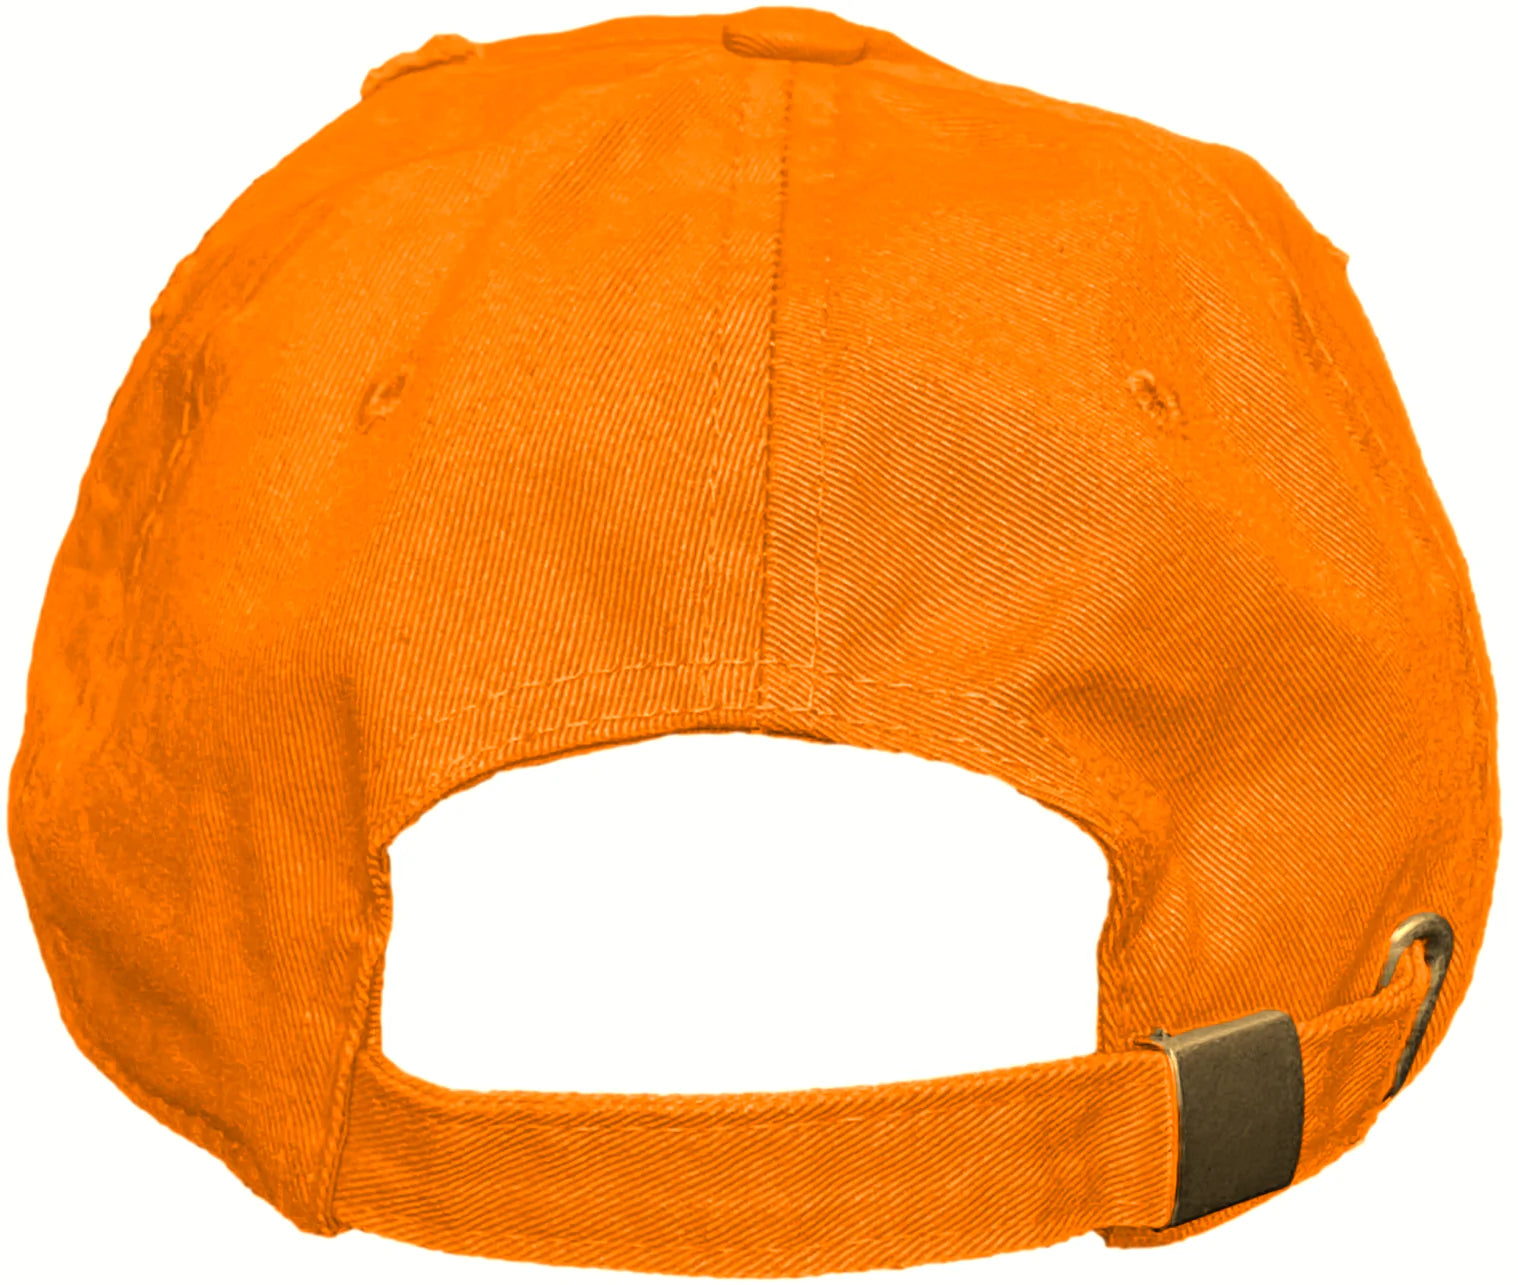 Crazy Baws : Orange Dad Hat : Sneaker Hats to Match